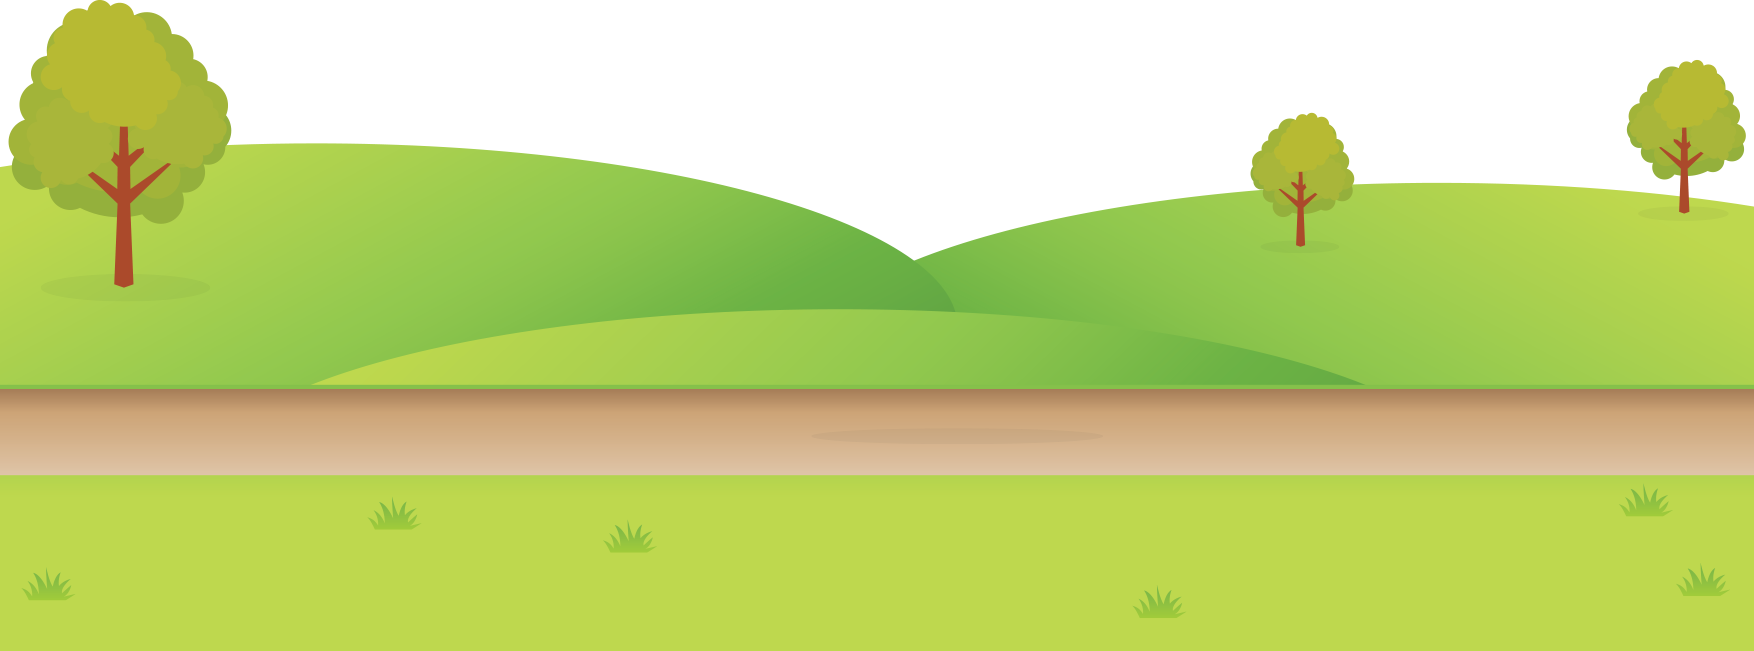 Land clipart grass land, Land grass land Transparent FREE for download on WebStockReview 2020